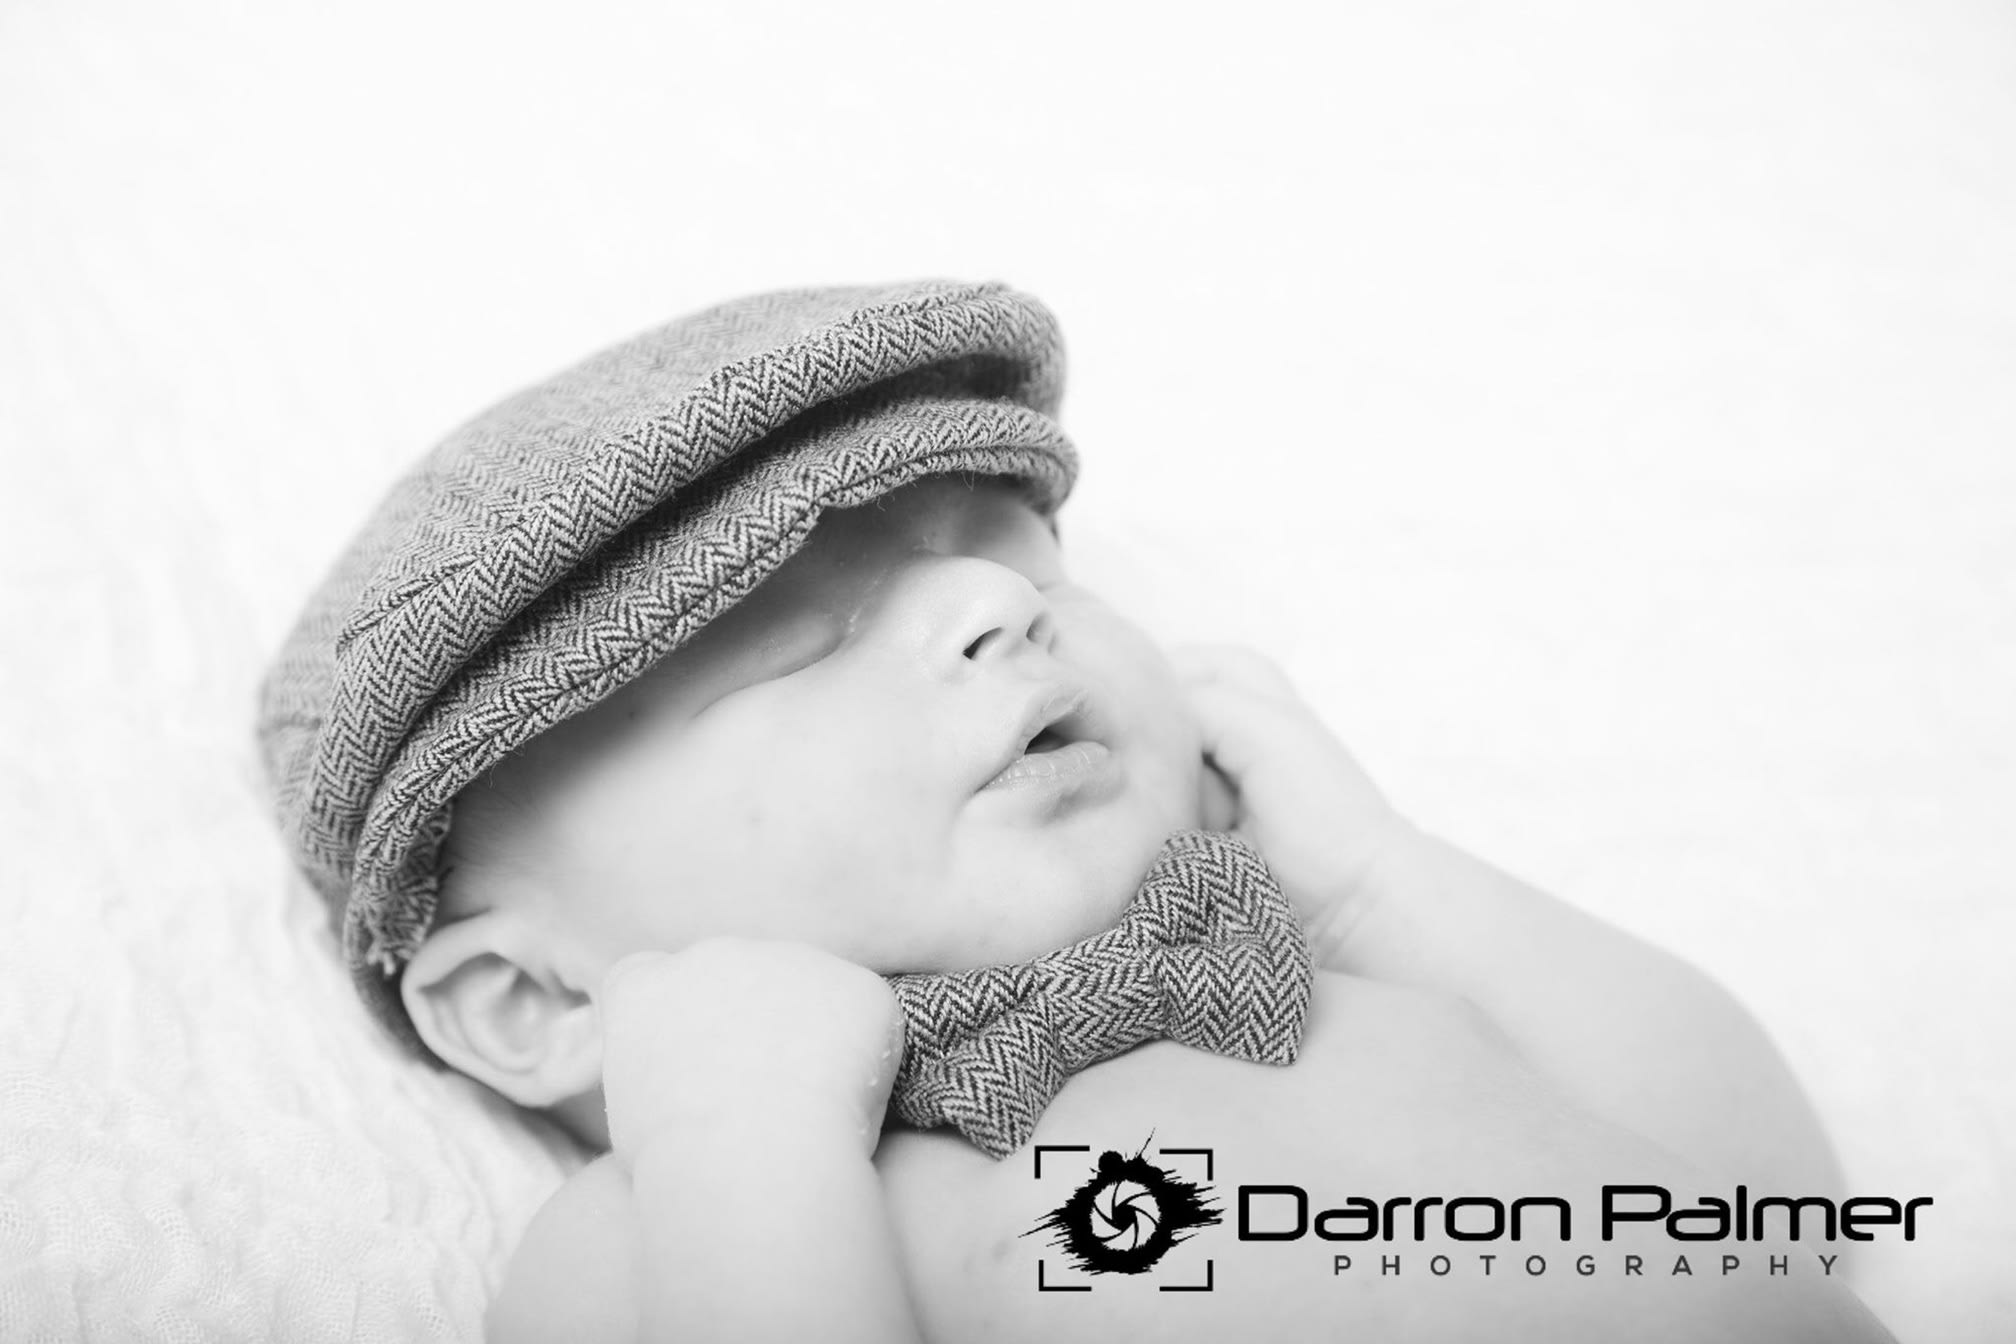 Images Darron Palmer Photography